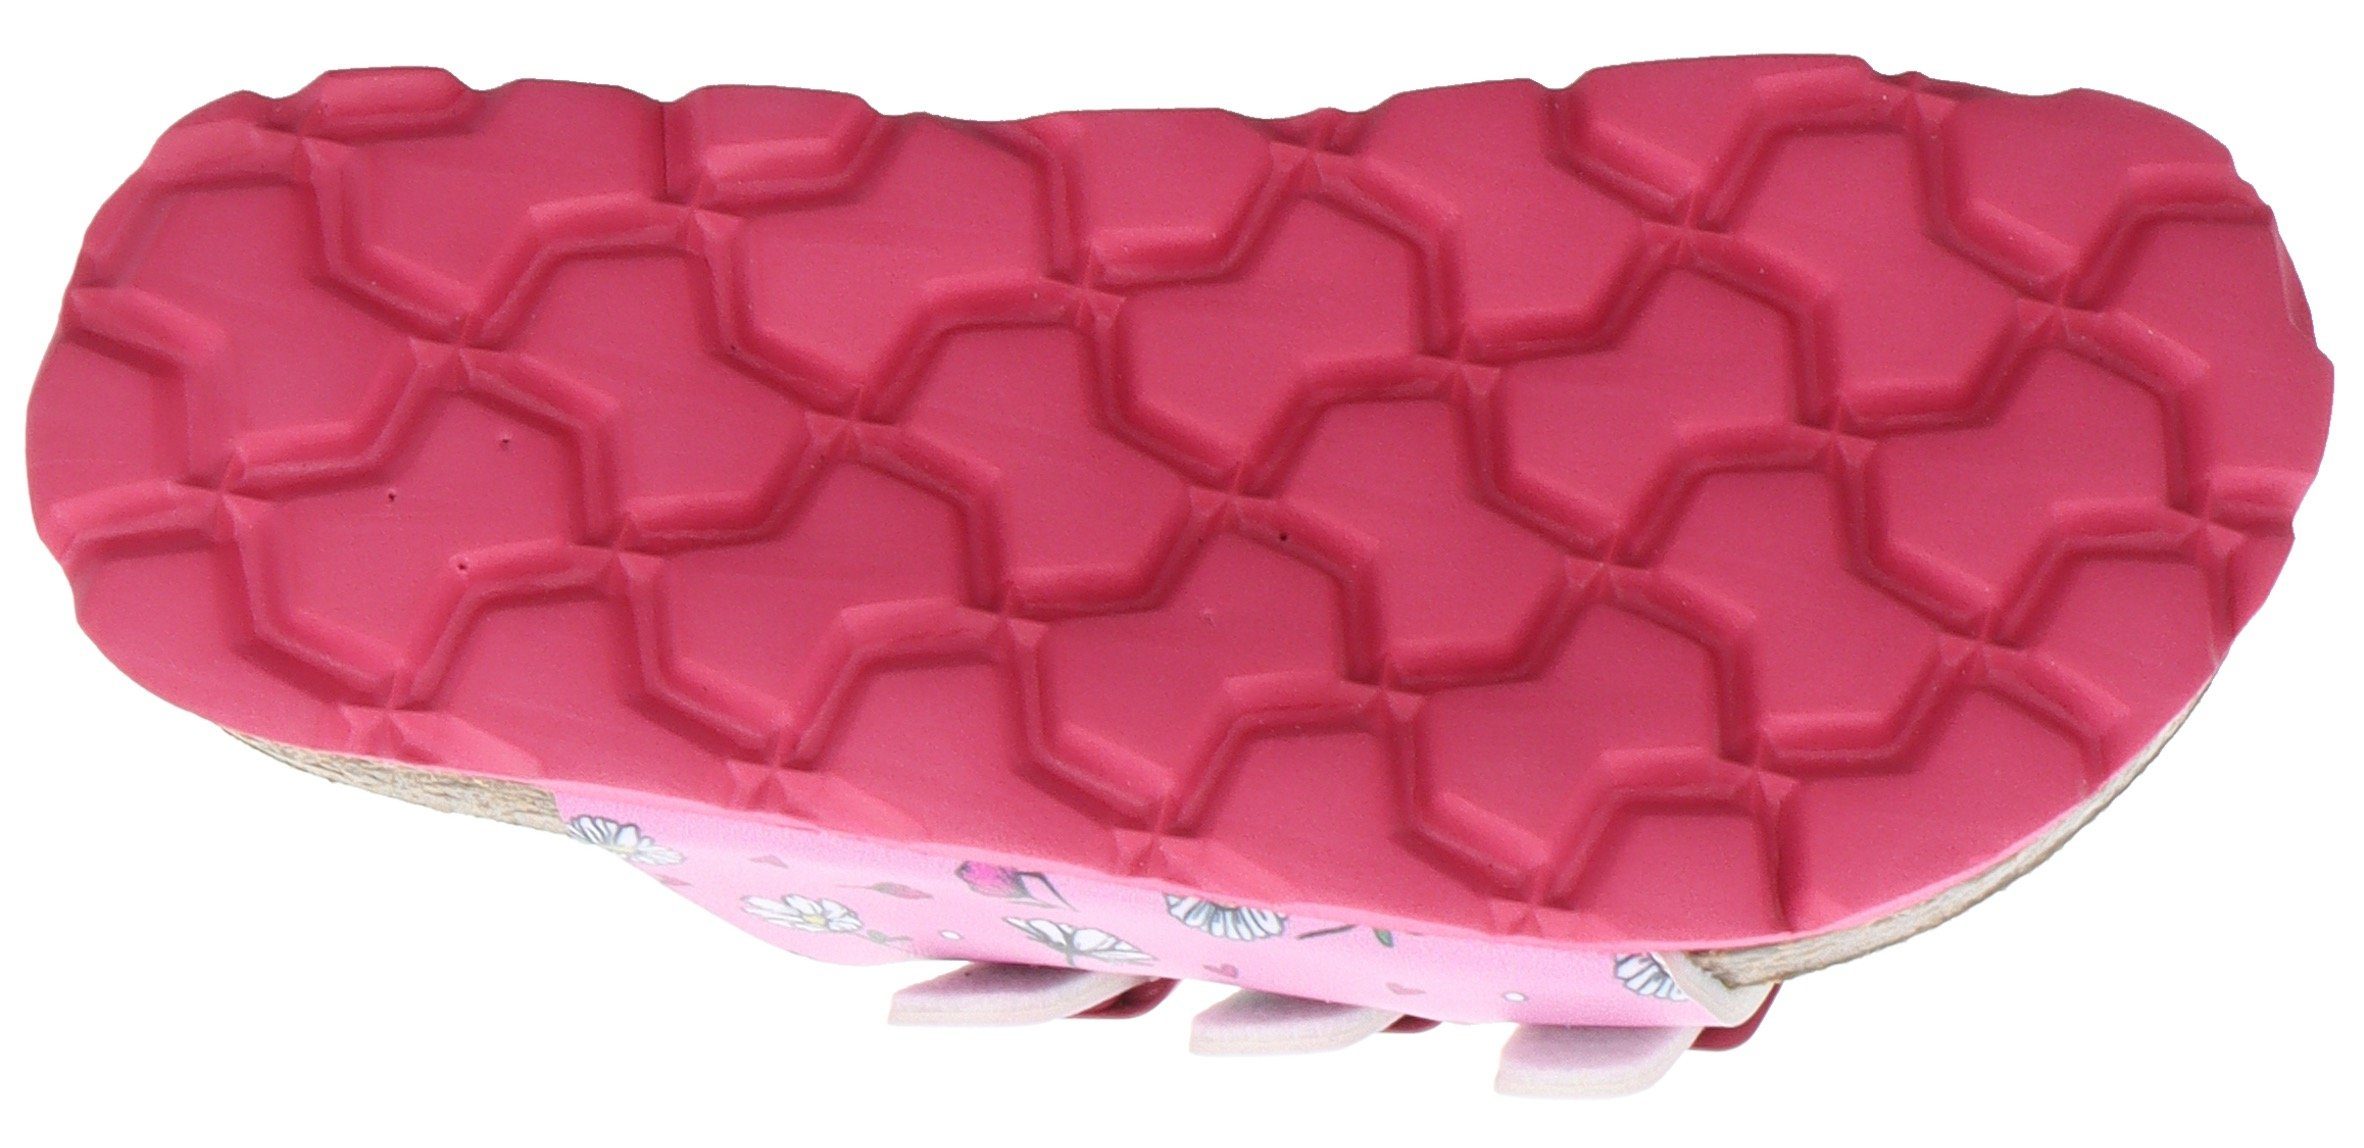 Superfit Fußbettpantolette WMS: Mittel Hausschuh mit allover rosa-pink Print